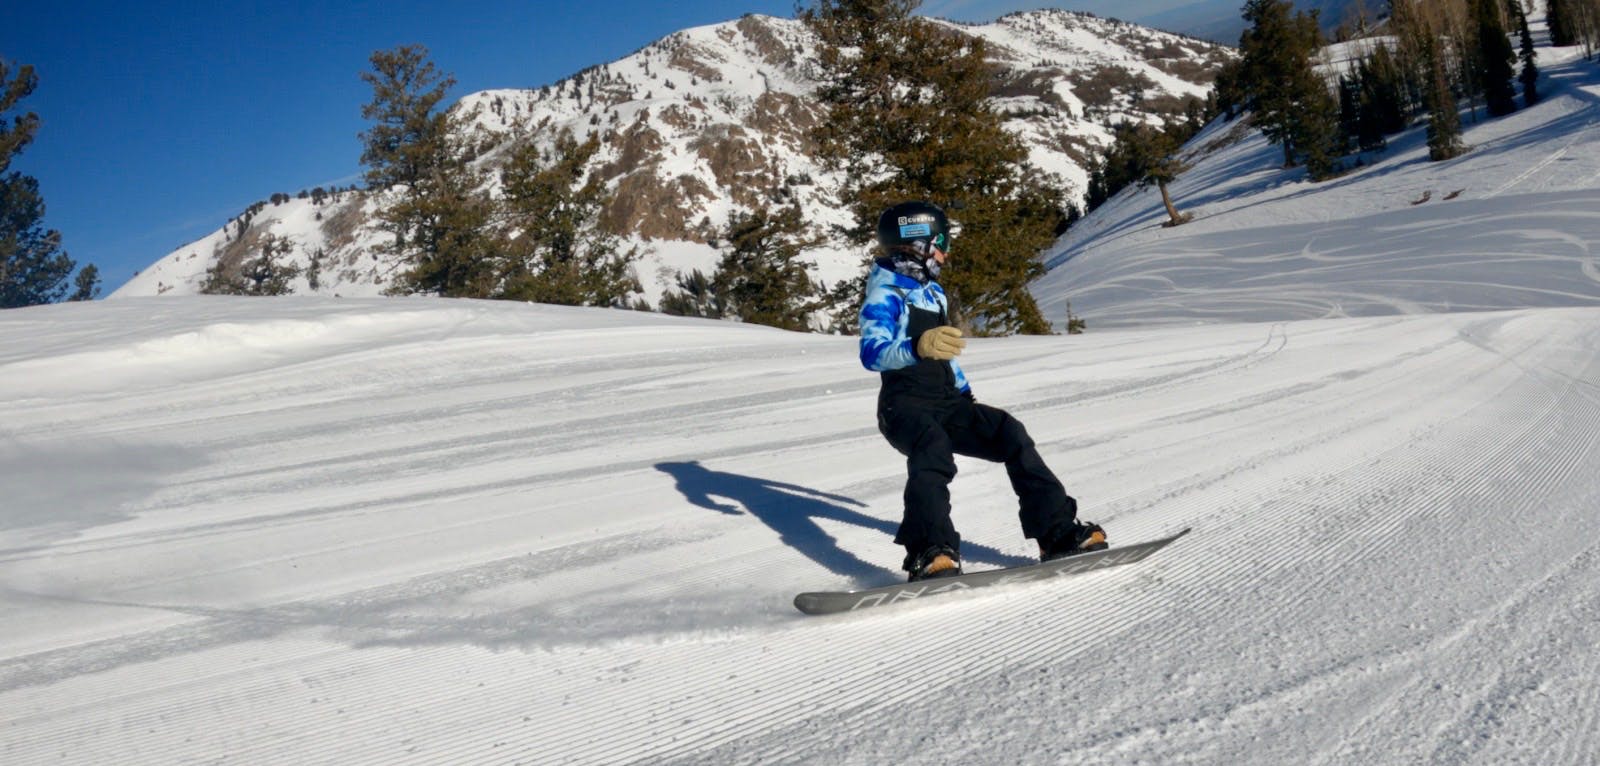 Snowboard Expert Arielle Busch riding the 2023 GNU Ladies Choice snowboard on a groomed run